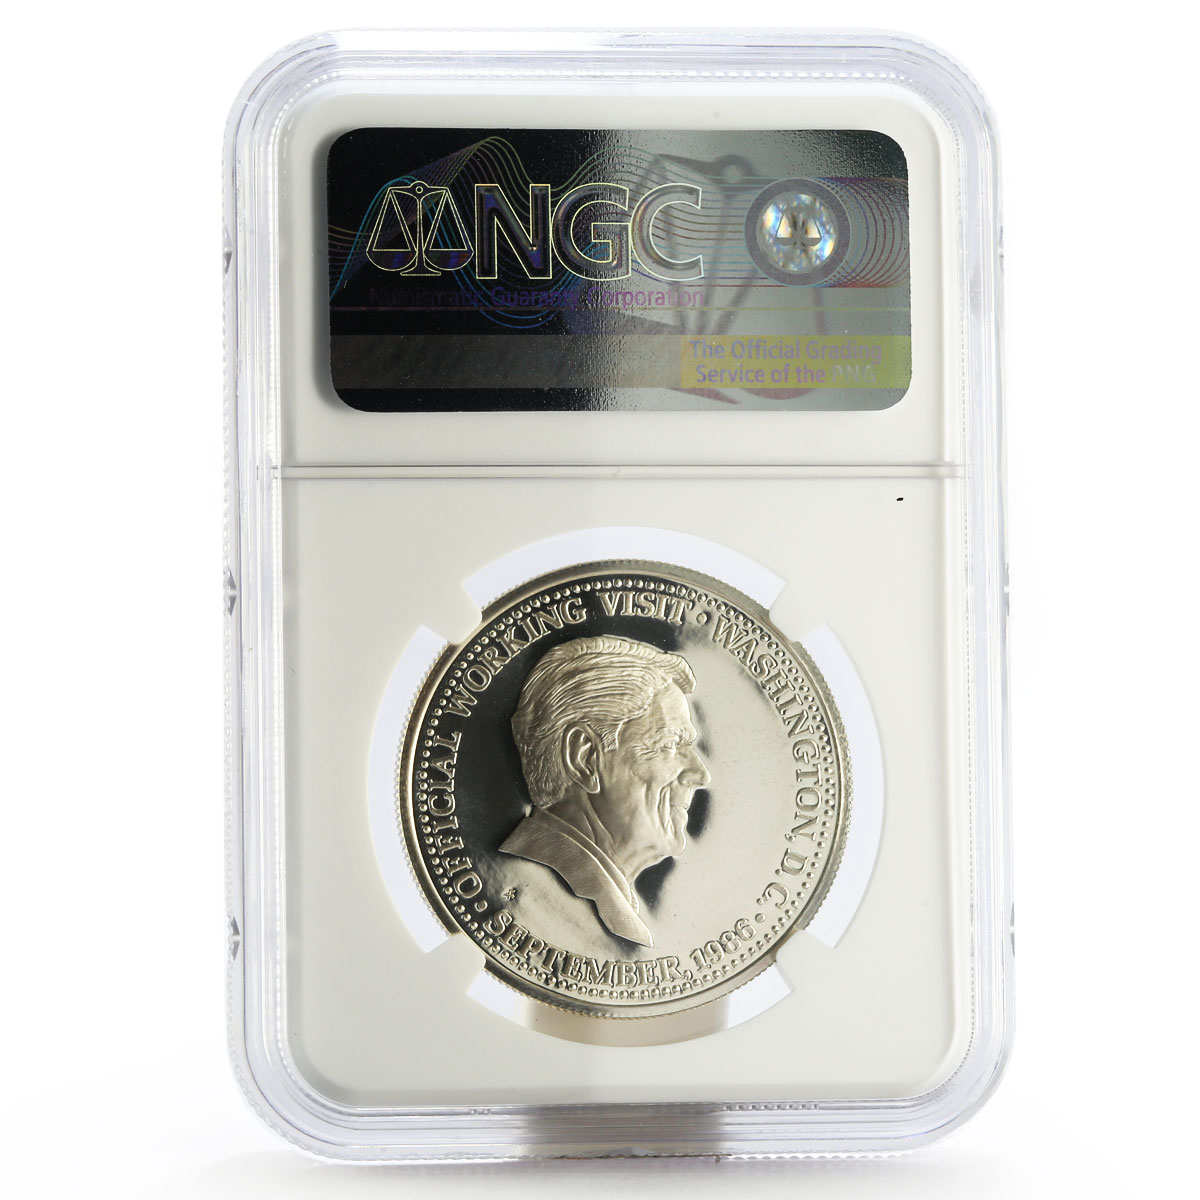 Philippines 25 piso President Aquino's Washington PF-69 NGC silver coin 1986